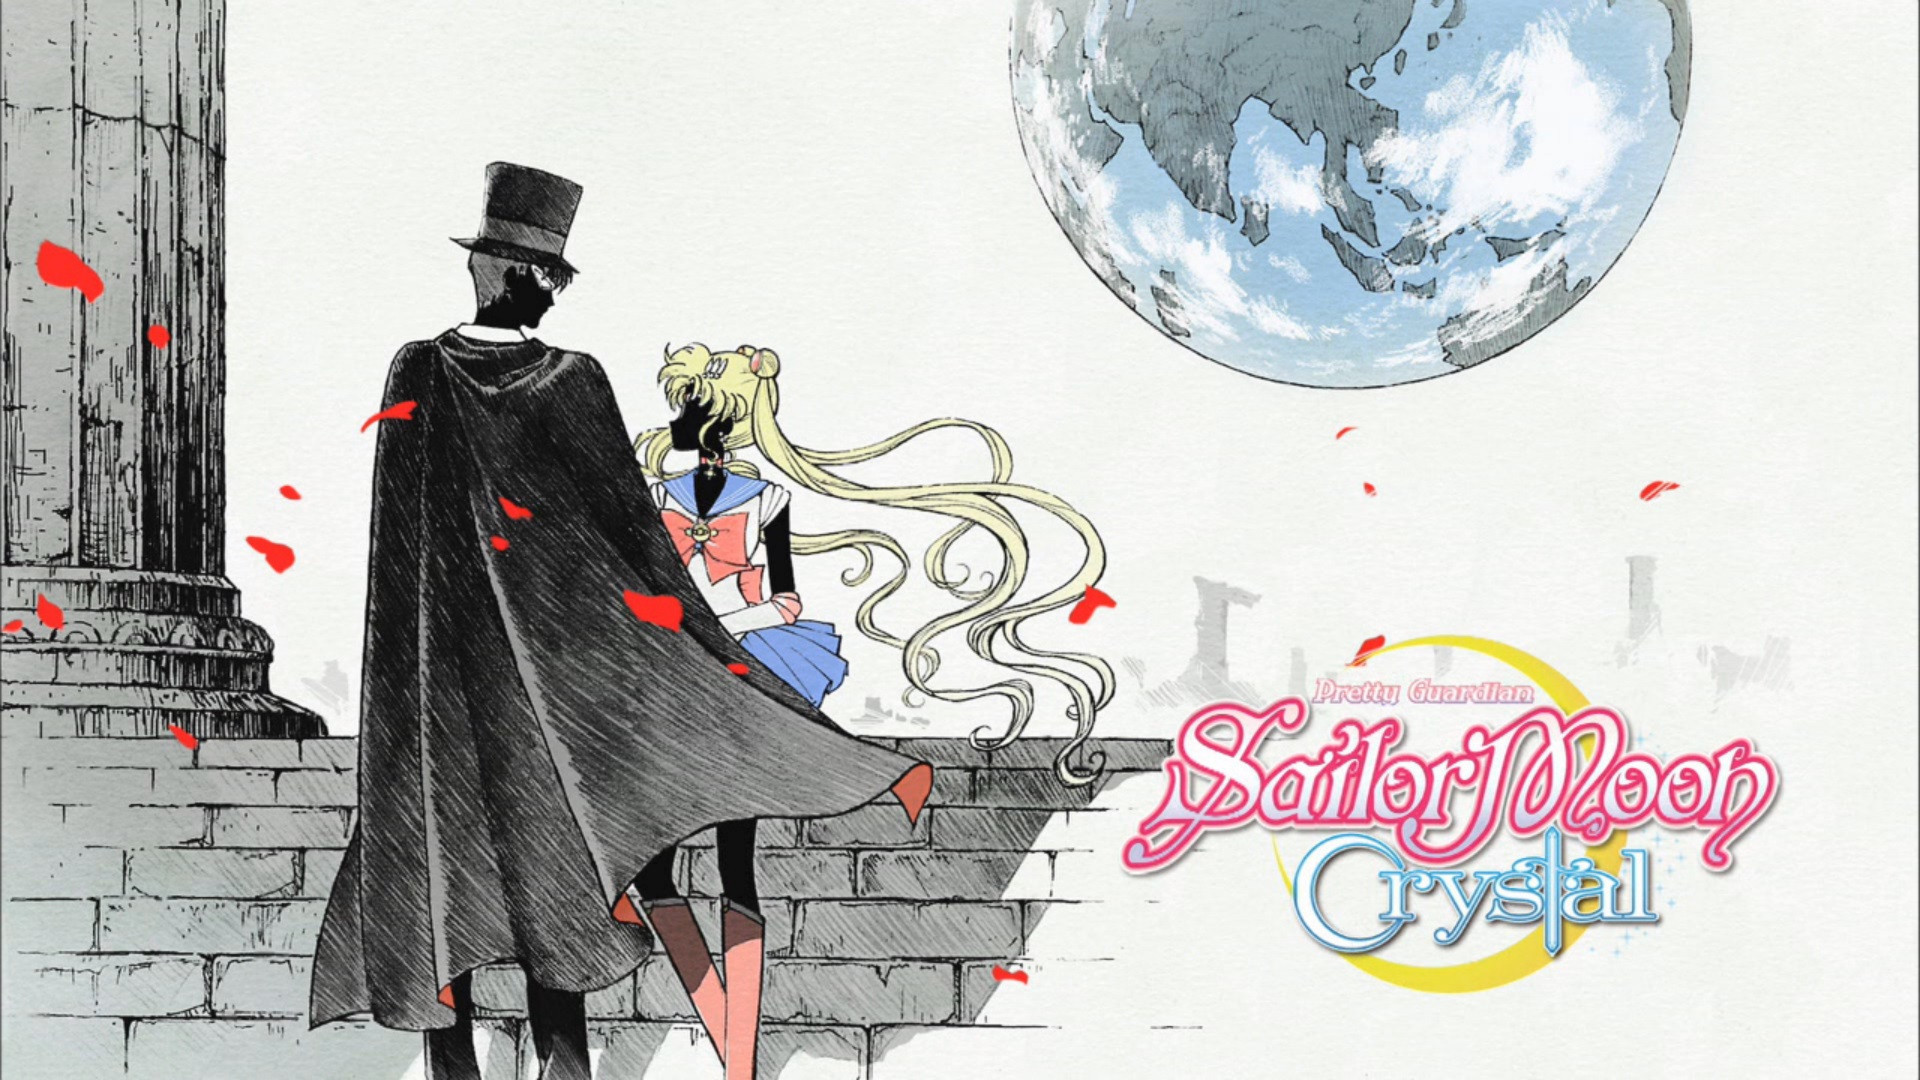 Bishoujo Senshi Sailor Moon download Bishoujo Senshi Sailor Moon image